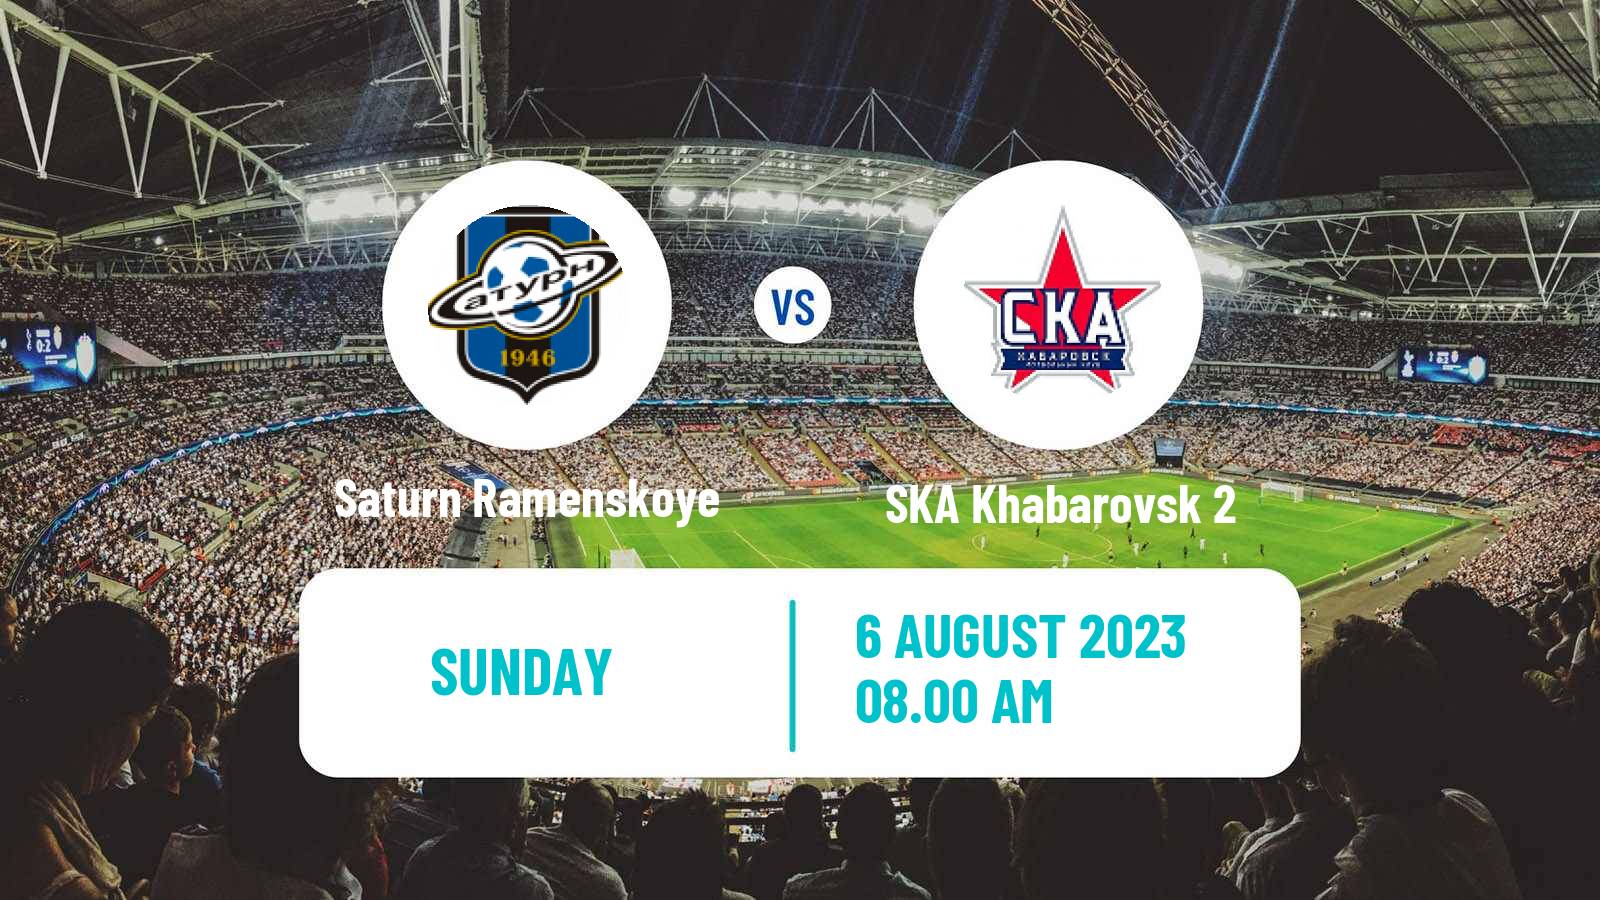 Soccer FNL 2 Division B Group 3 Saturn Ramenskoye - SKA Khabarovsk 2